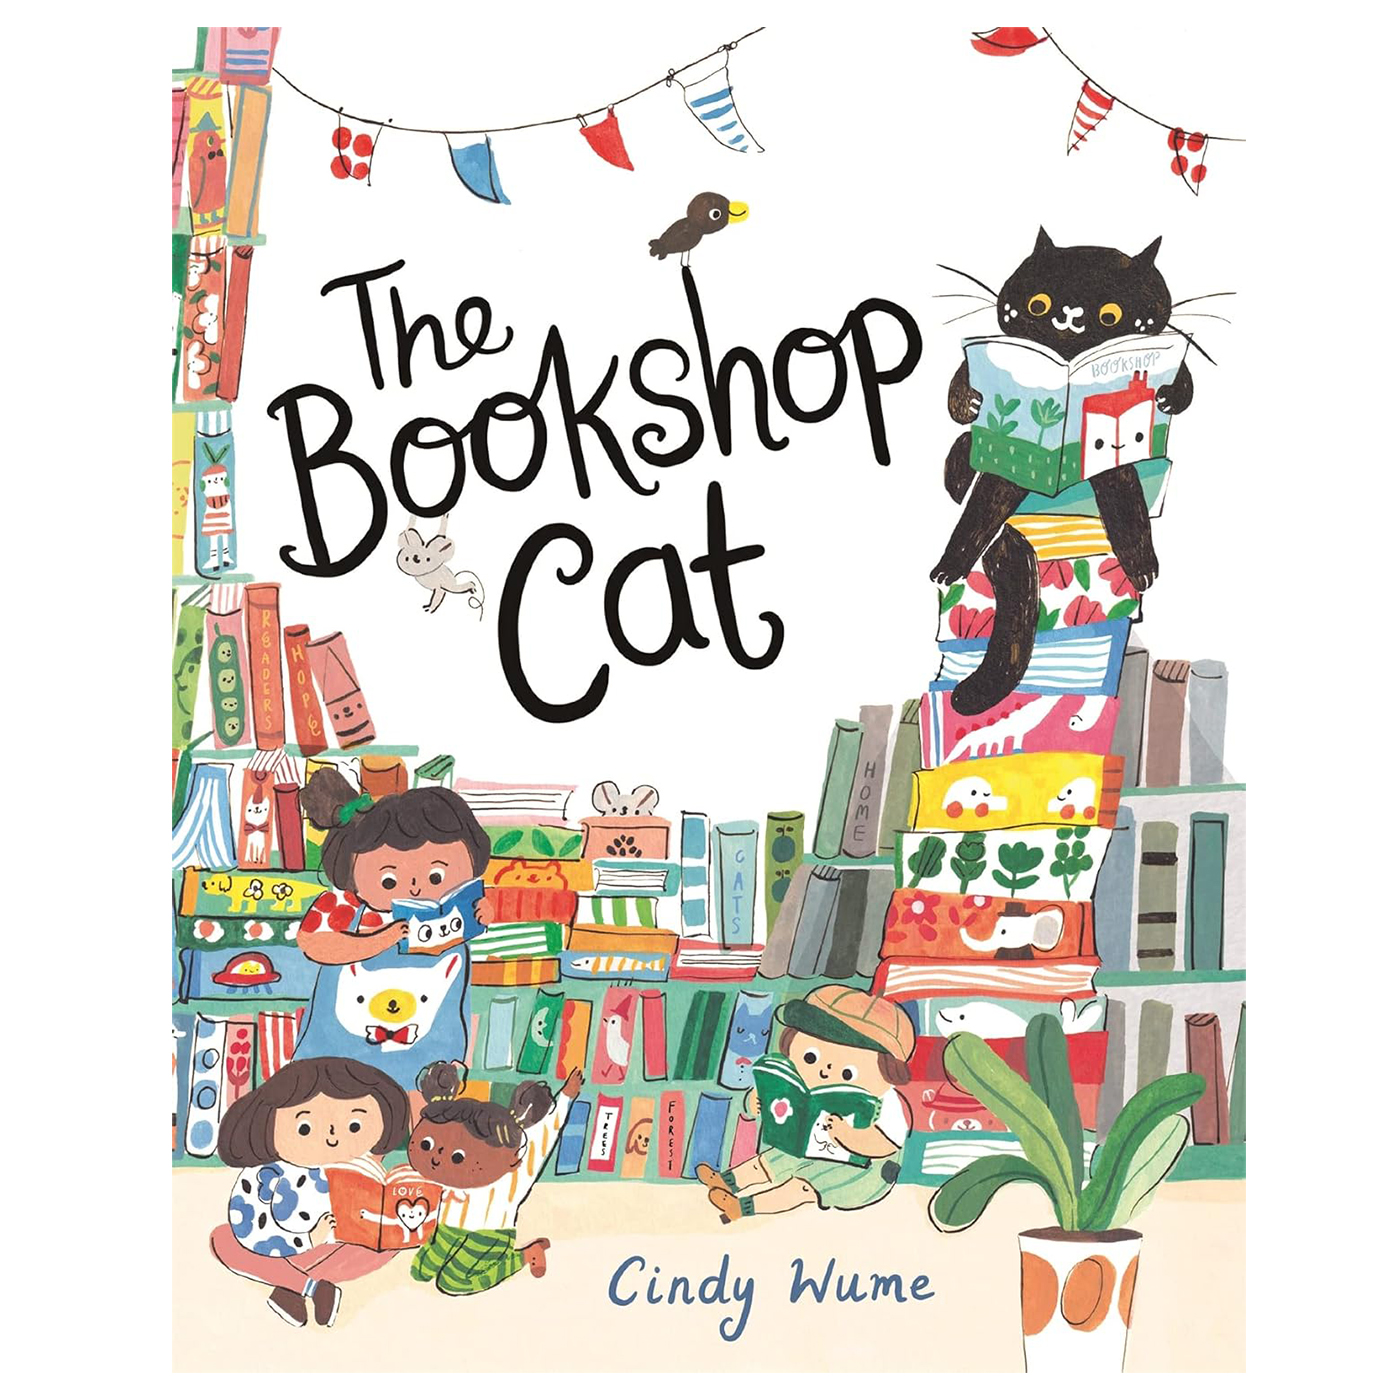  The Bookshop Cat